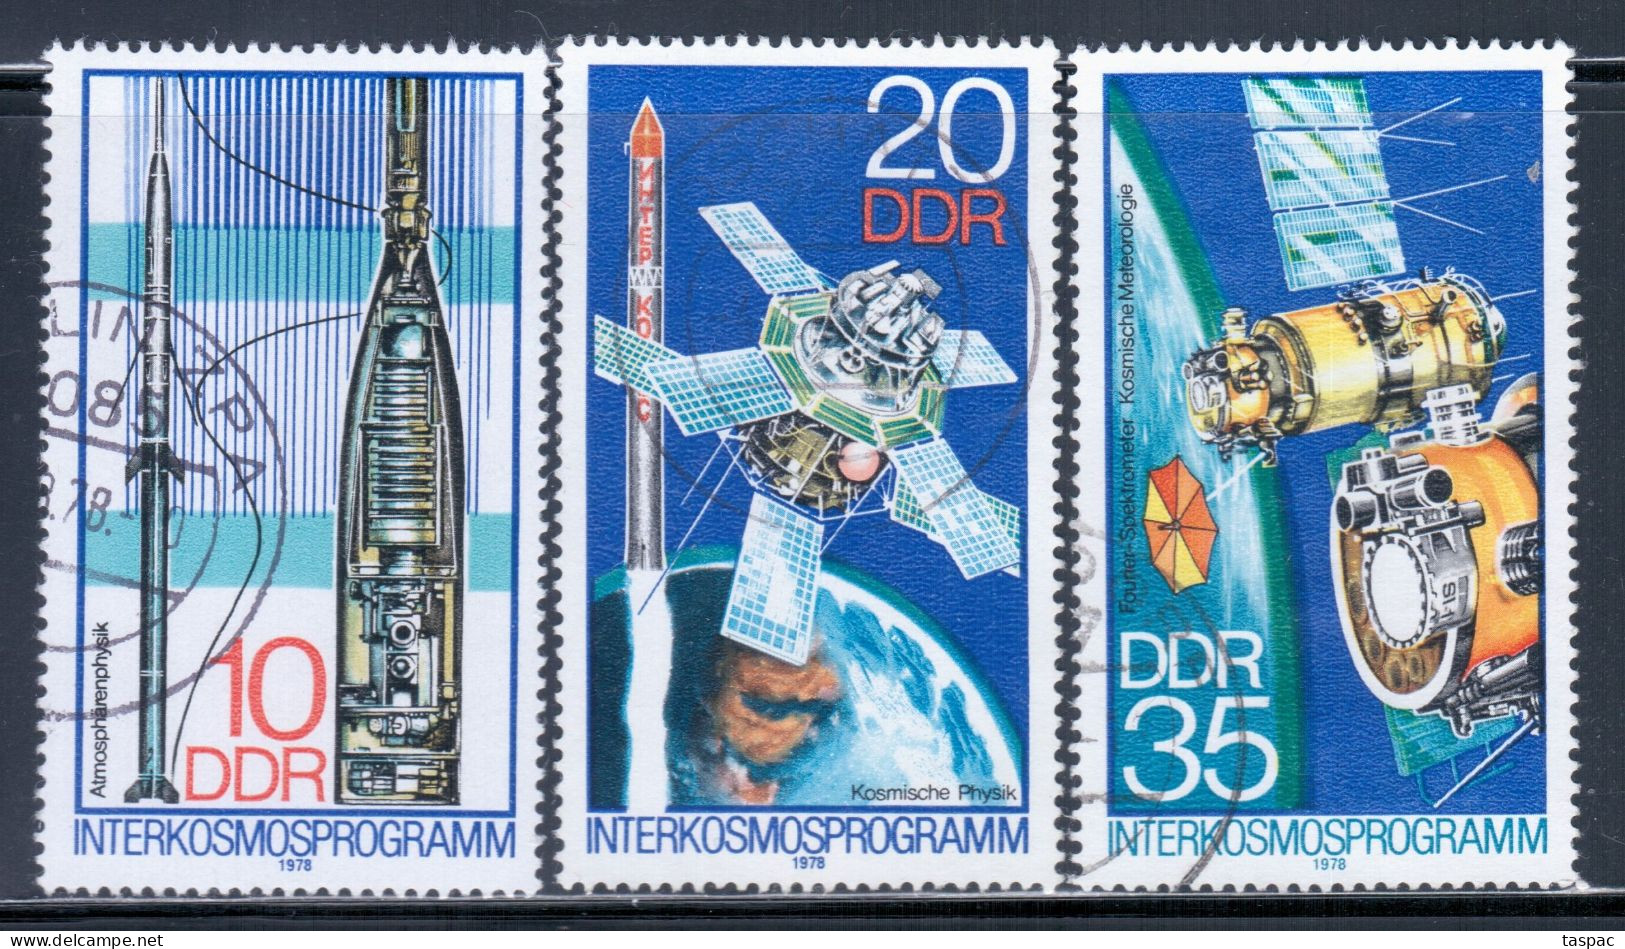 East Germany / DDR 1978 Mi# 2310-2312 Used - Intercosmos / Space - Europe